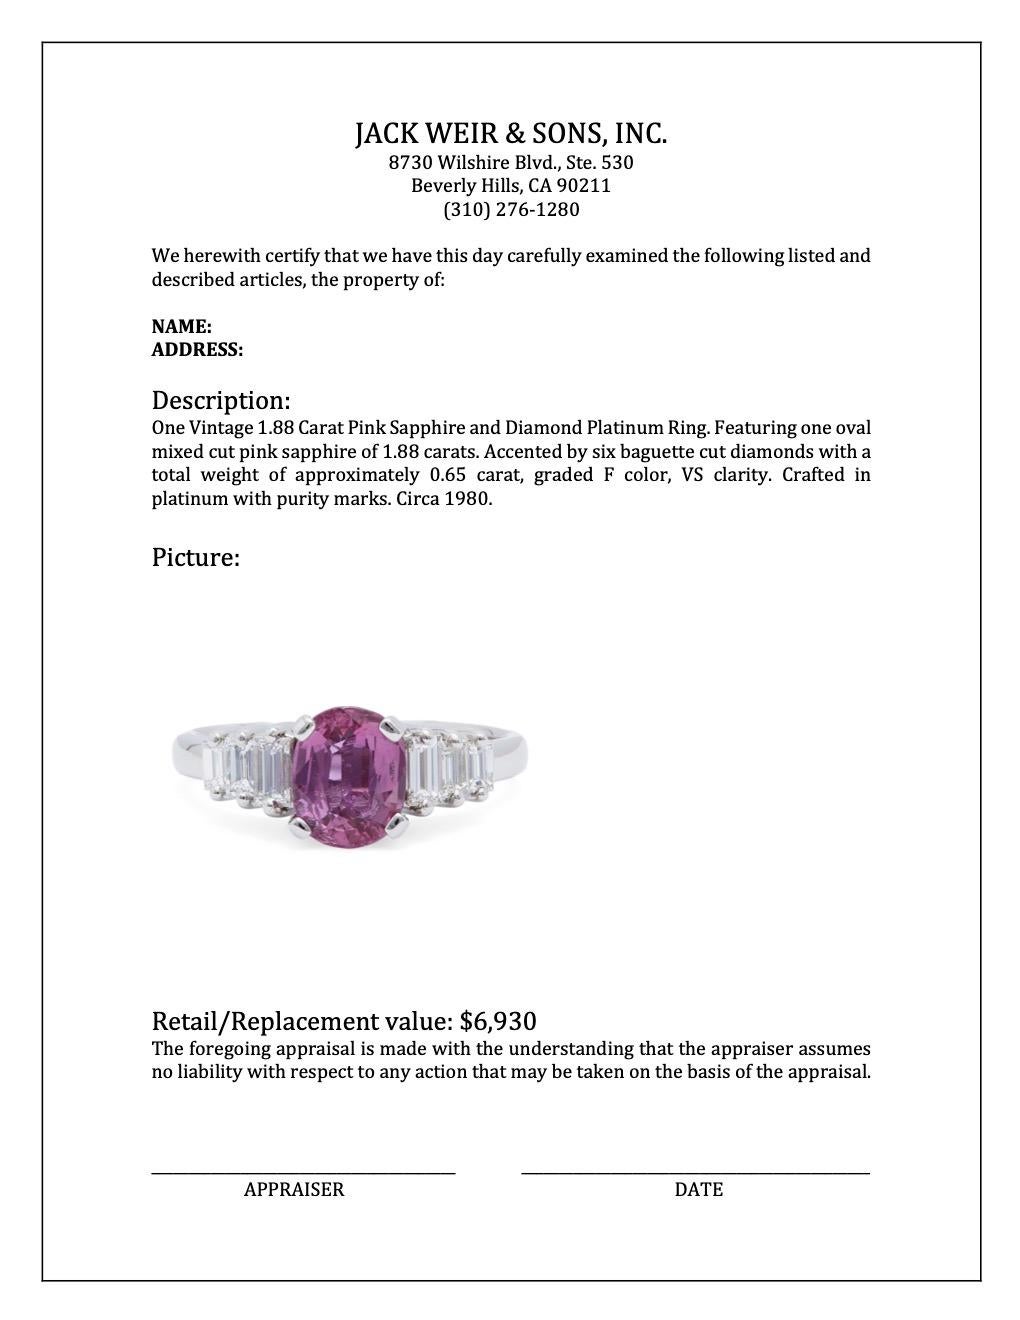 Vintage 1.88 Carat Pink Sapphire and Diamond Platinum Ring 2